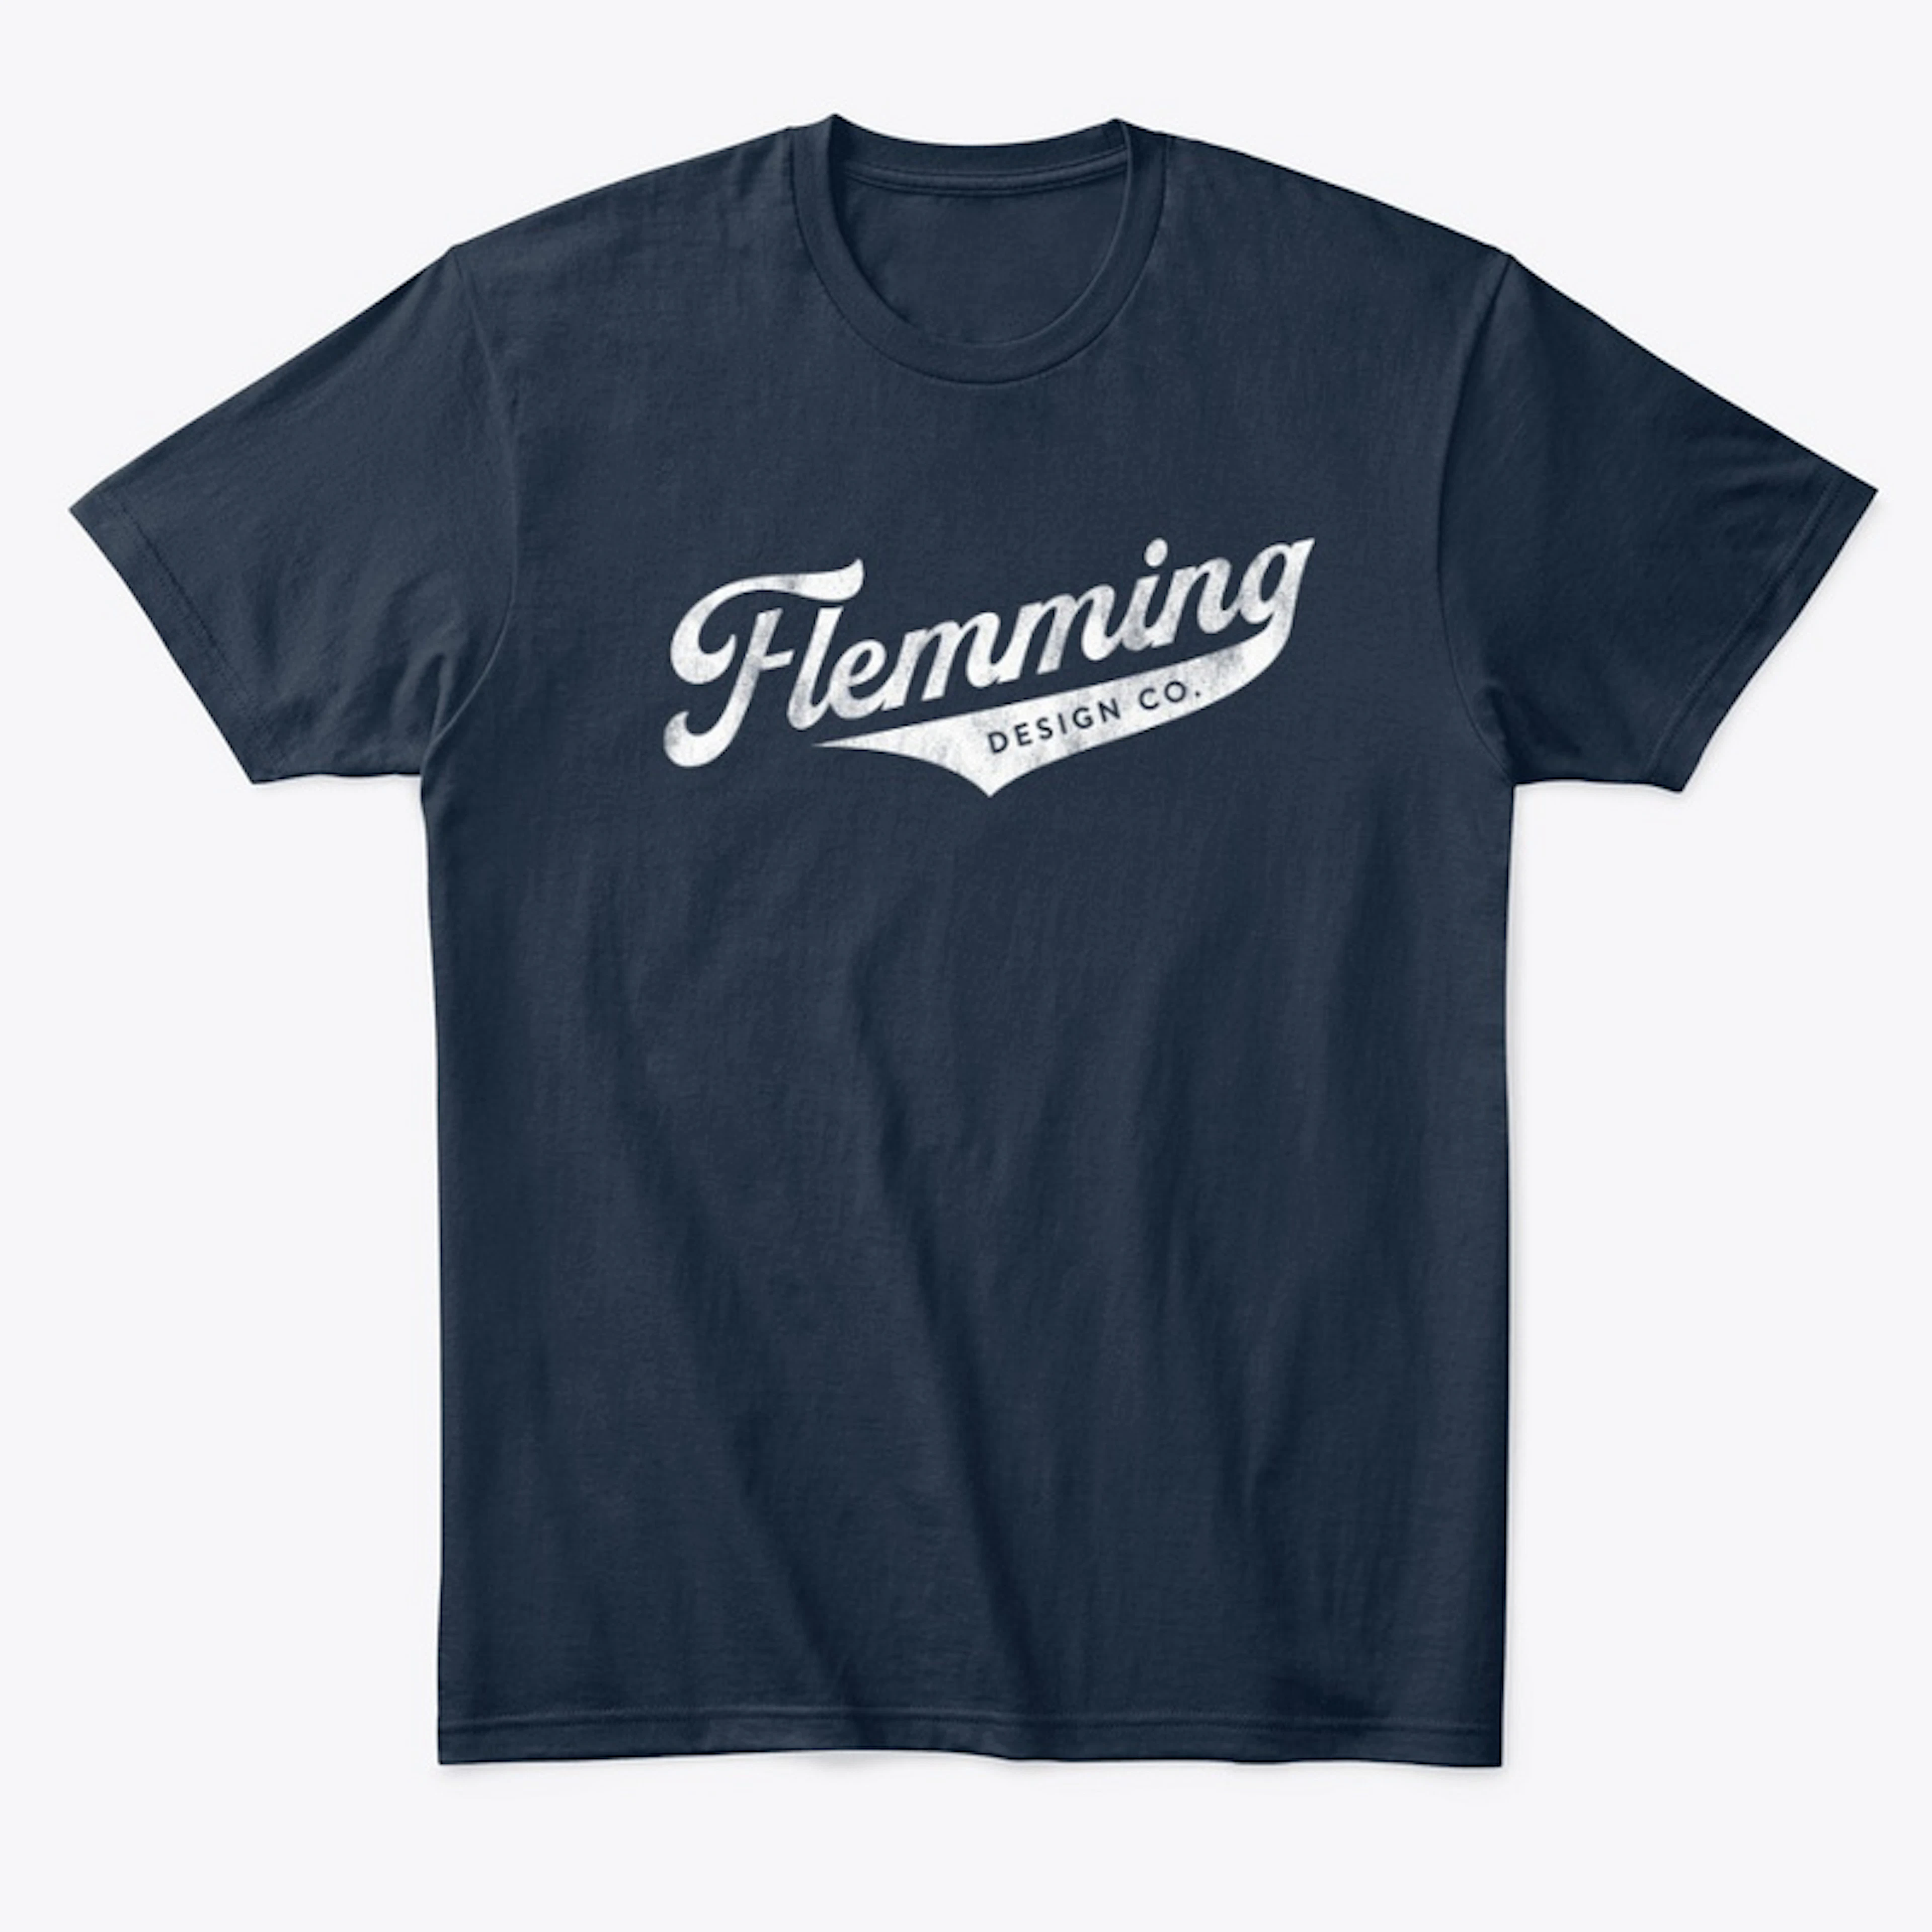 Flemming Design Co.